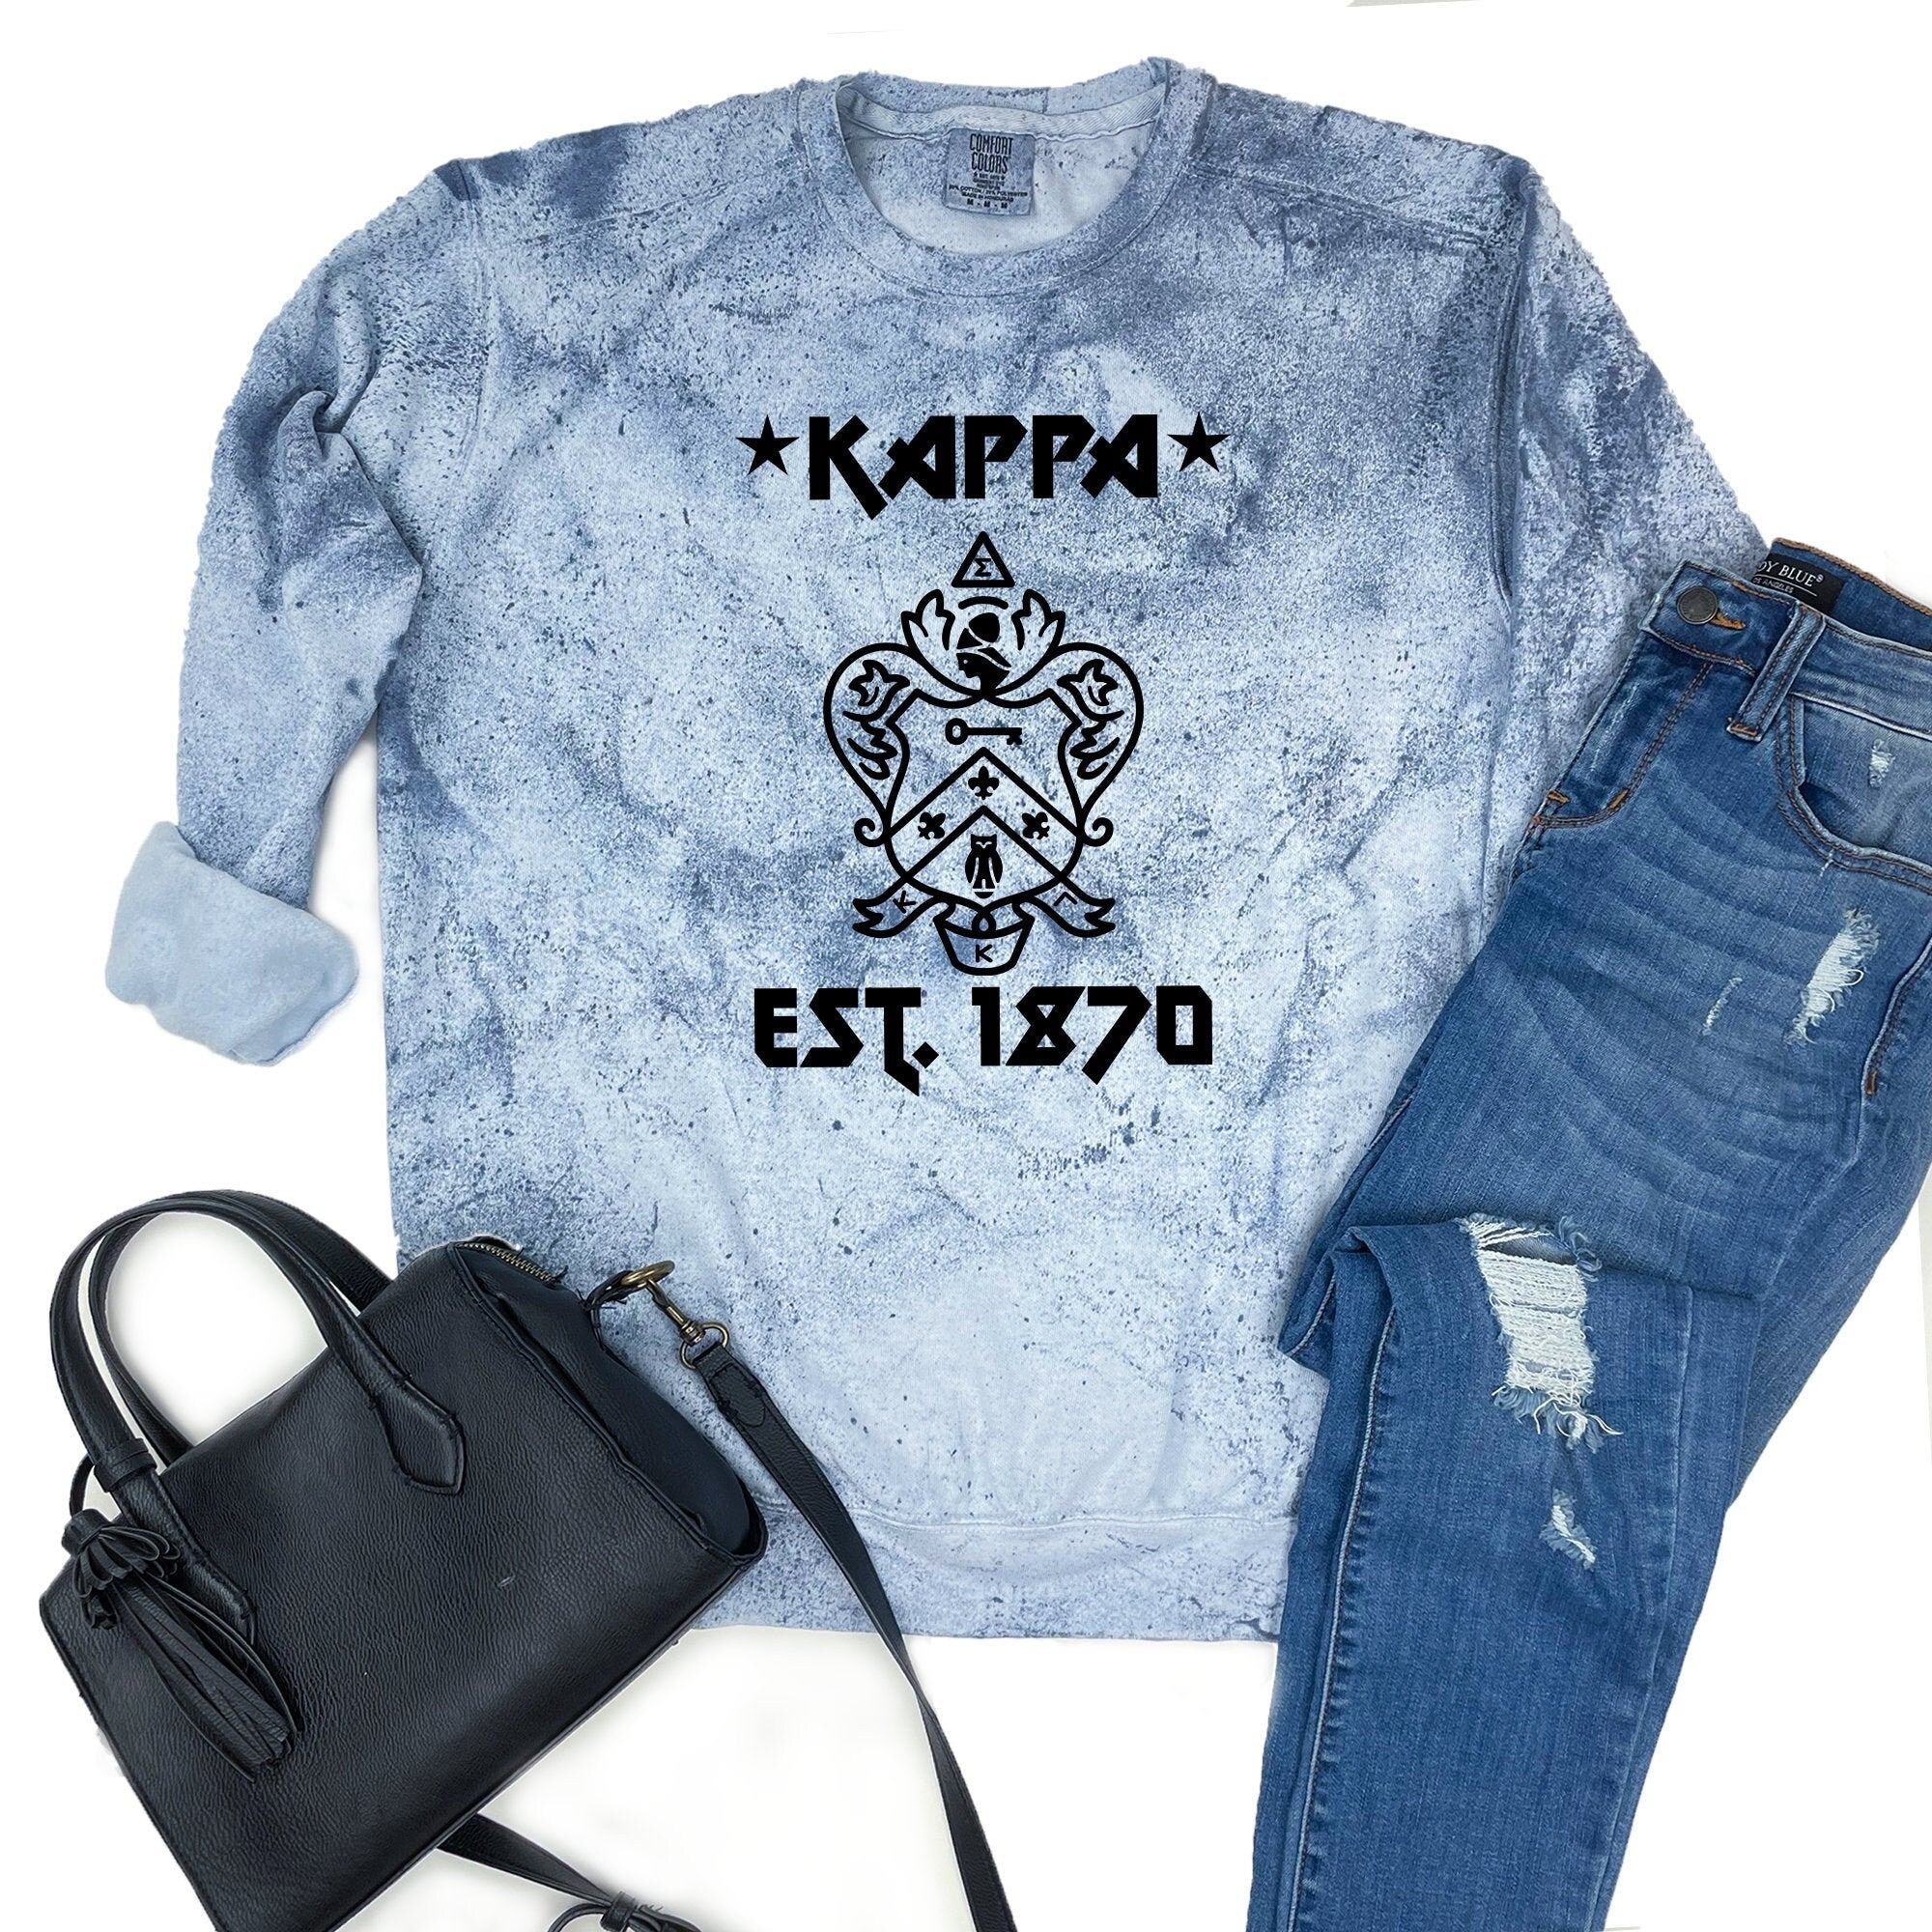 Kappa Kappa Gamma Vintage Band Sweatshirt - Go Greek Chic